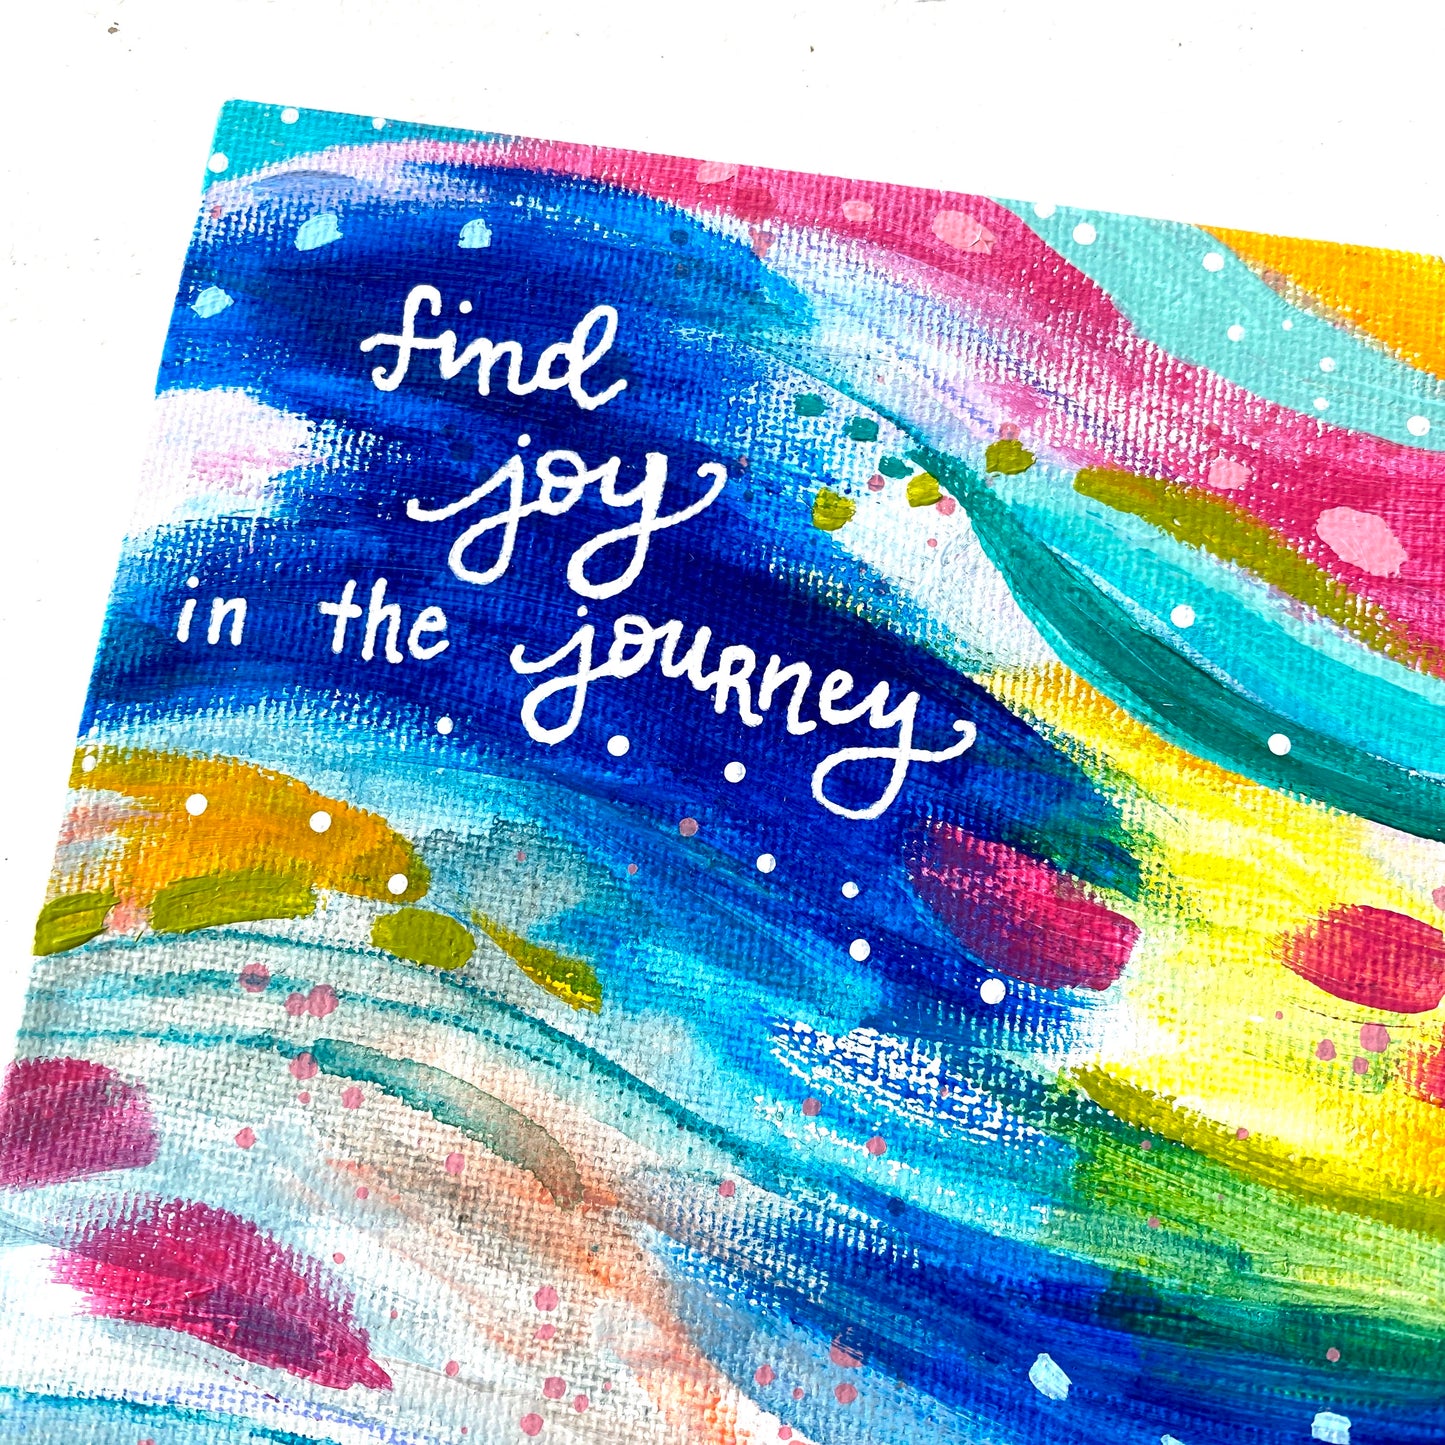 August 2020 Daily Painting Day 26 “Joyful Journey” 5x7 inch original